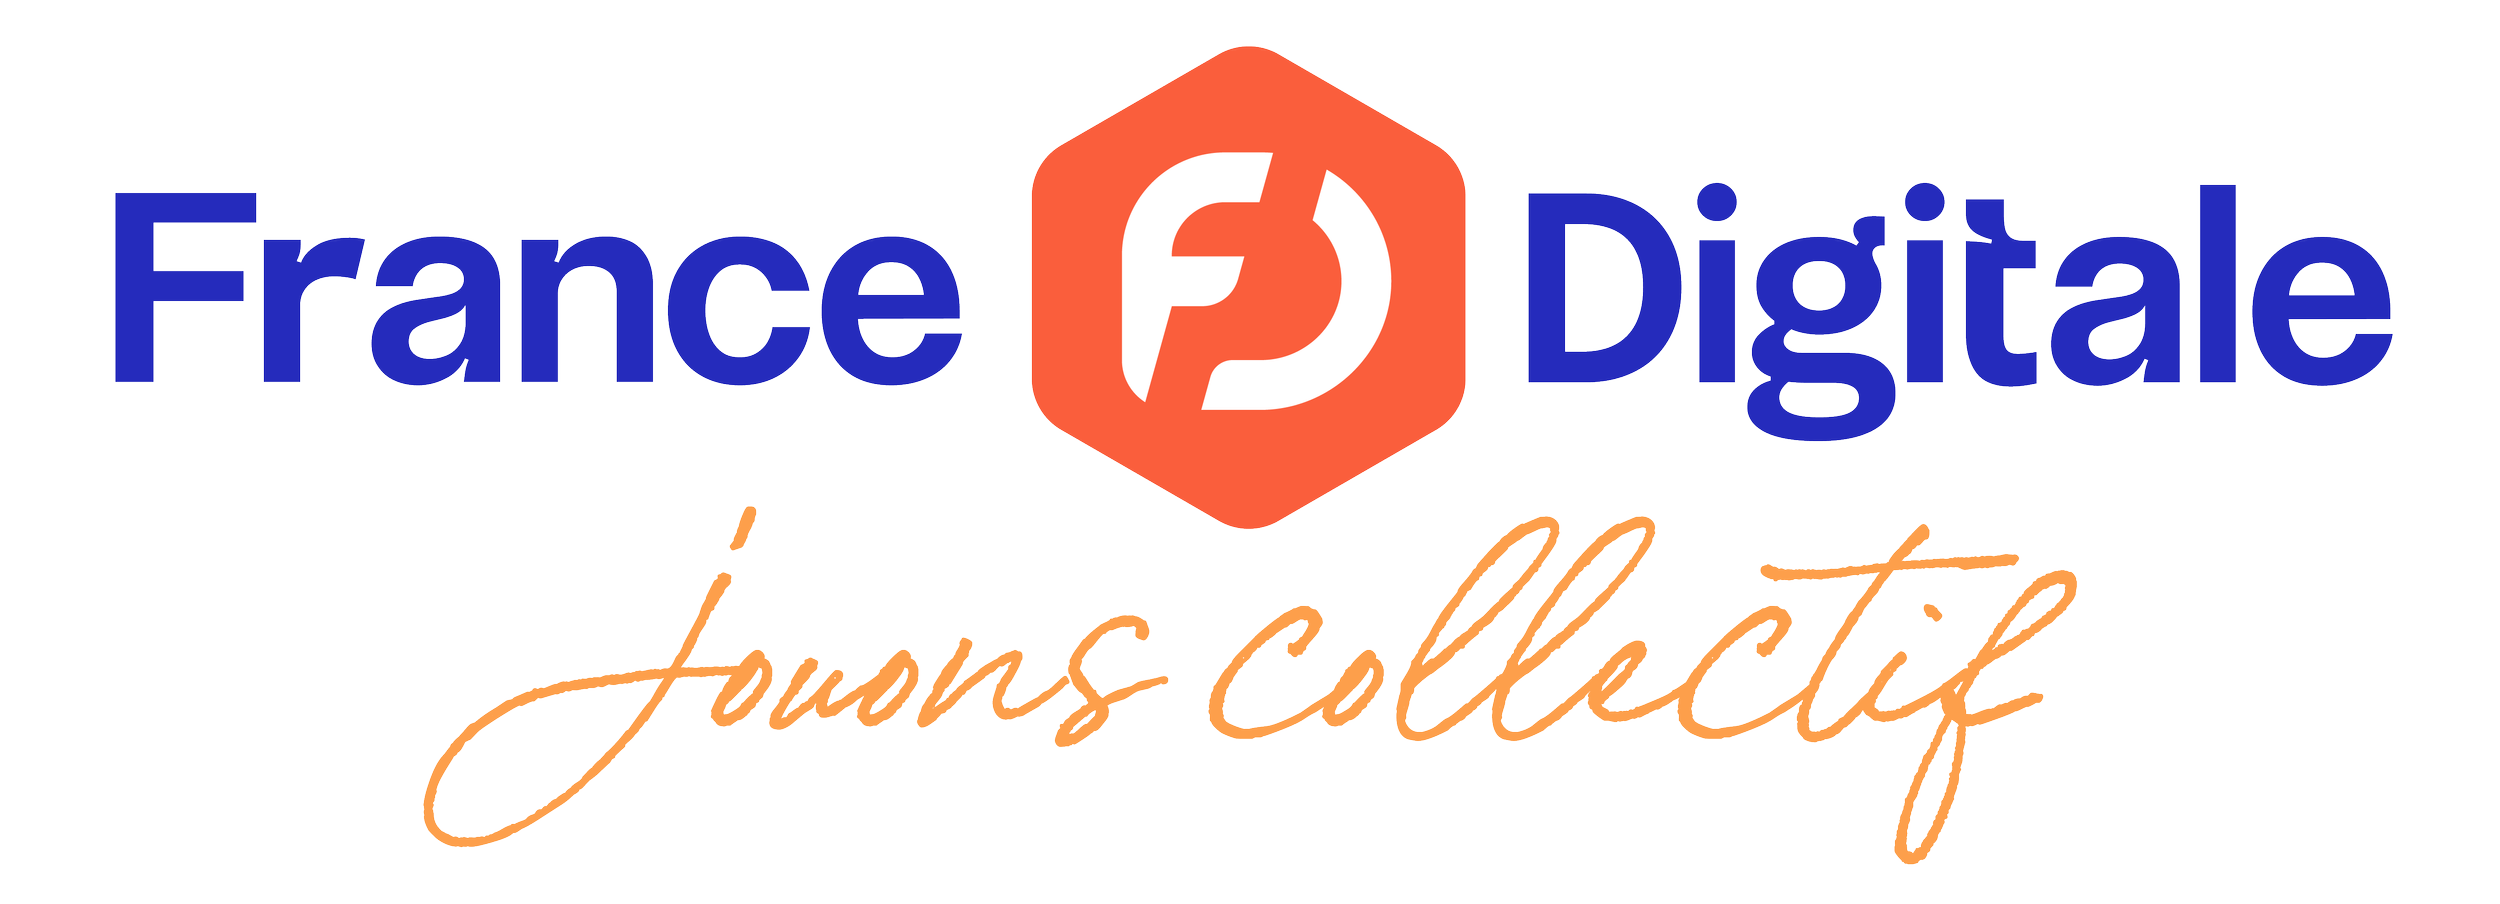 France Digitale - logo bleu - full.png